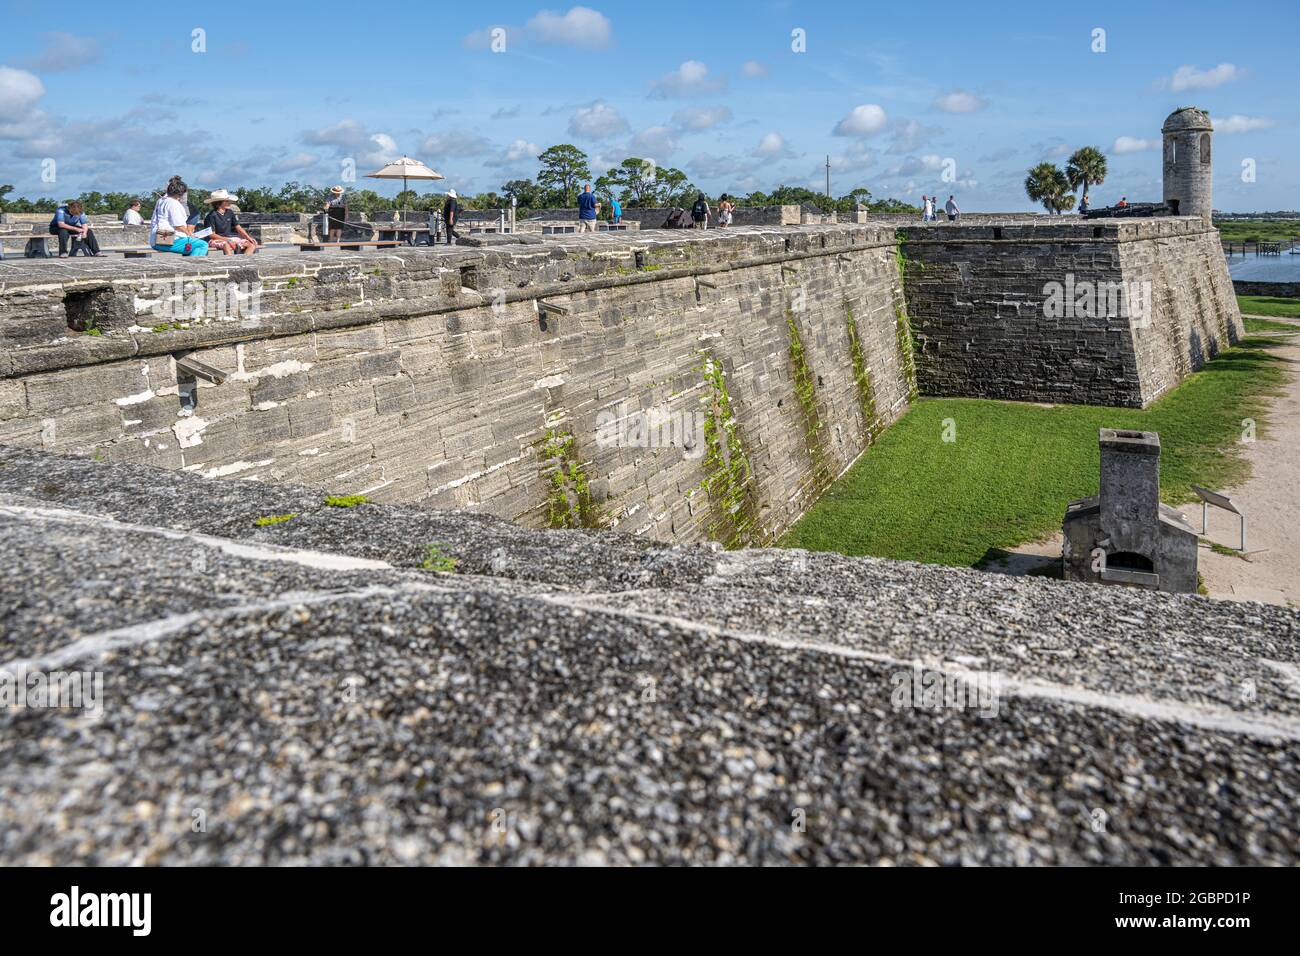 Florida tourists along the terreplein of Castillo de San Marcos, a 17th century masonry fort on Matanzas Bay in Old City St. Augustine, Florida. (USA) Stock Photo